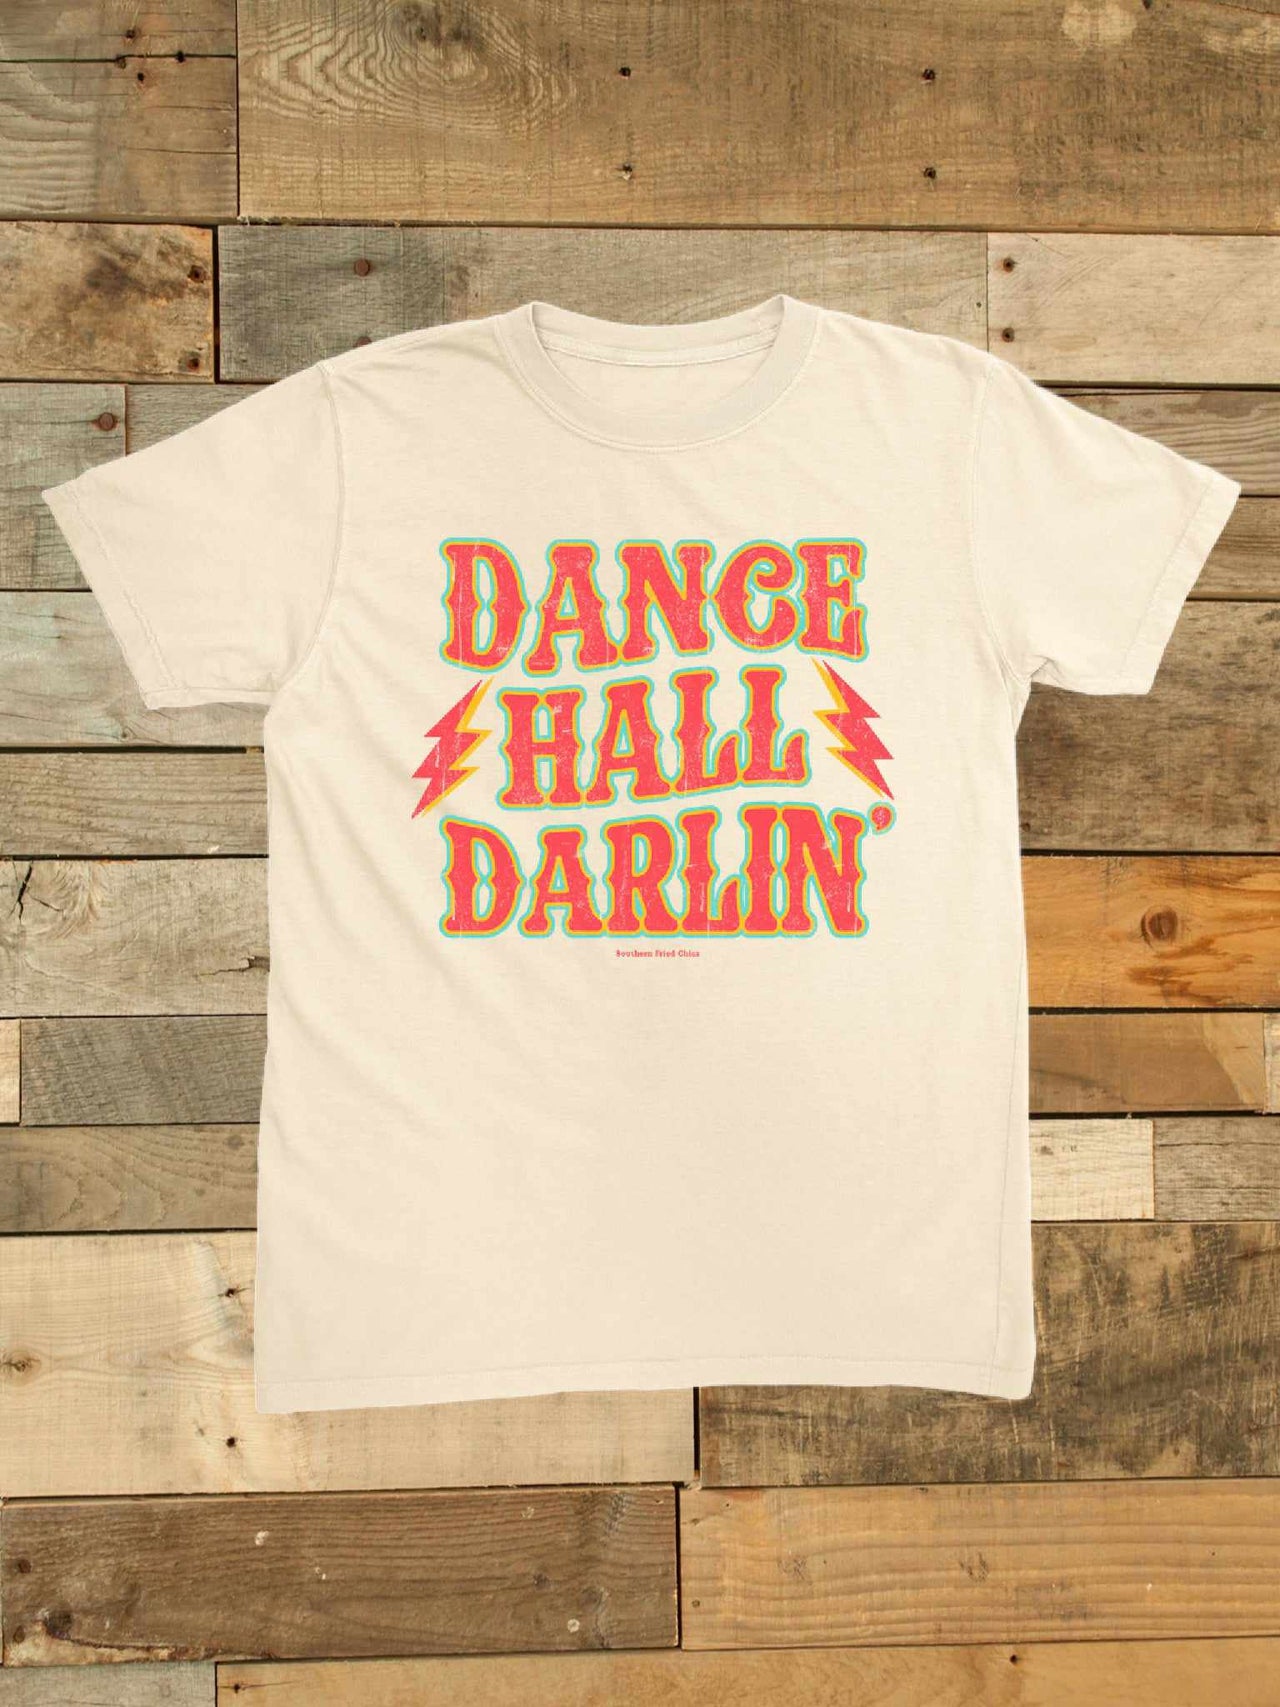 Dance Hall Darlin' graphic t-shirt.